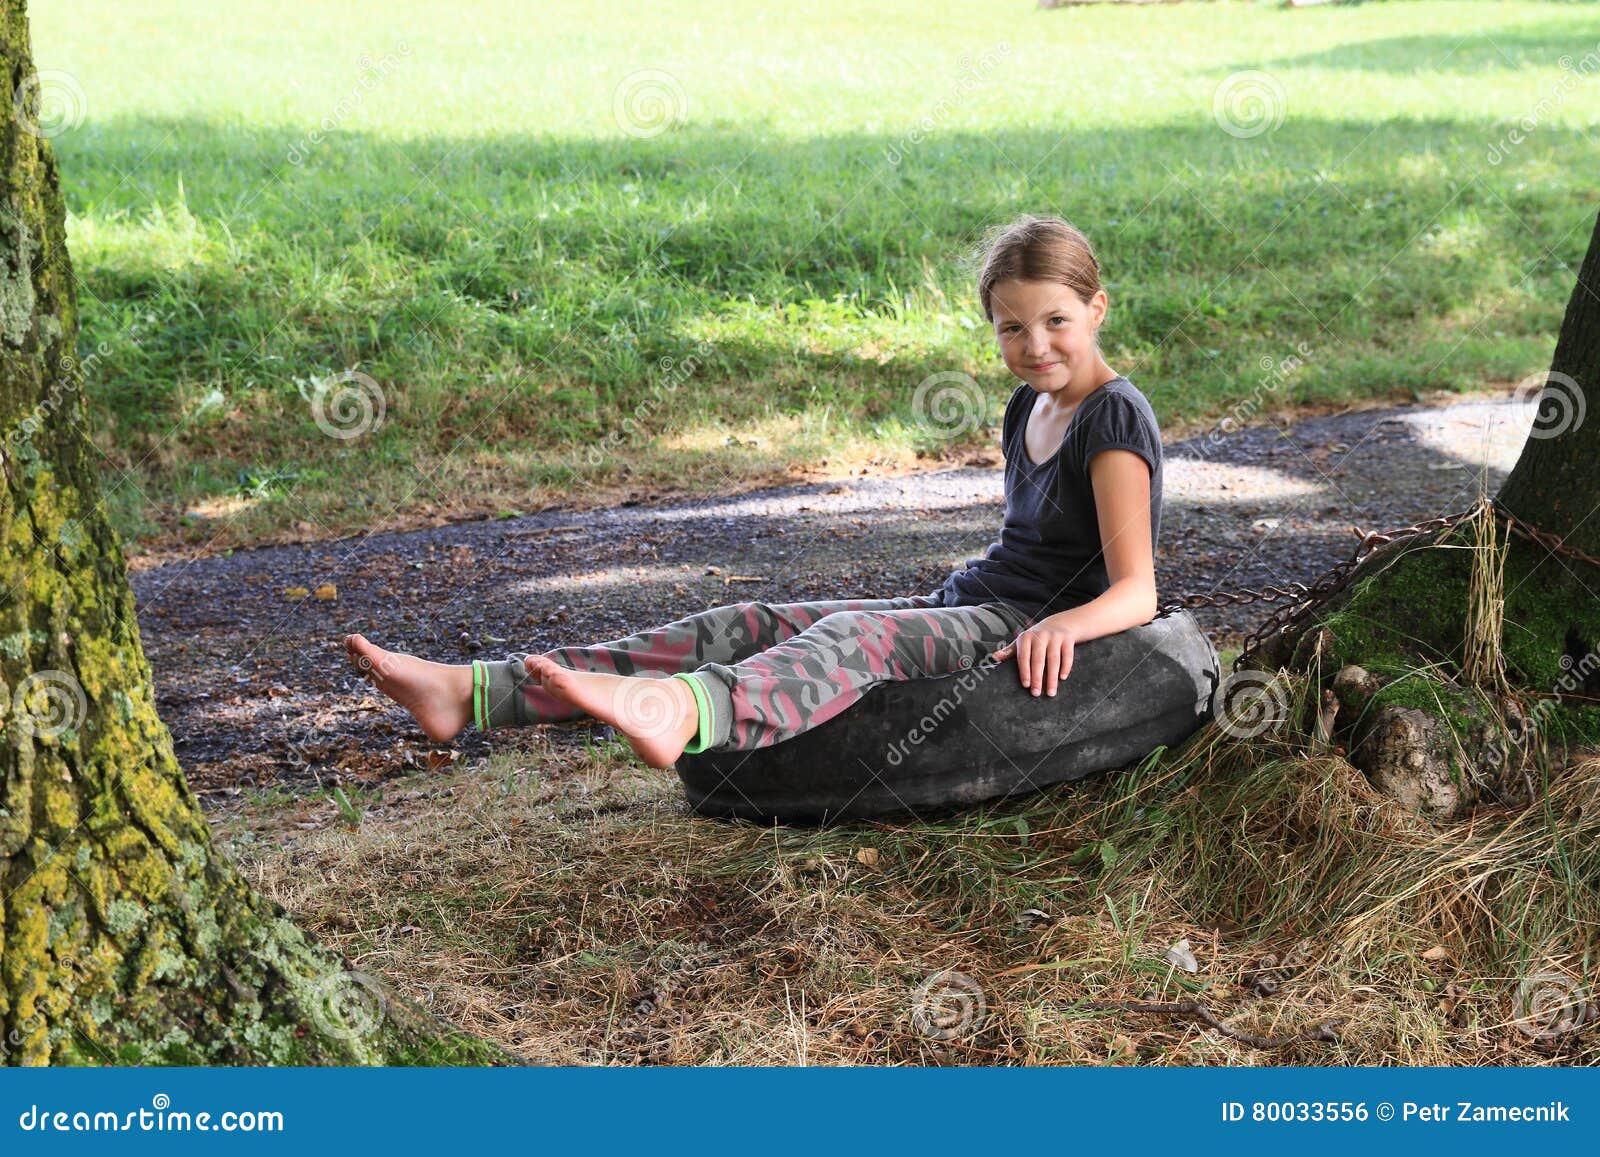 https://thumbs.dreamstime.com/z/girl-sitting-tire-barefoot-kid-young-smiling-old-asphalt-road-80033556.jpg